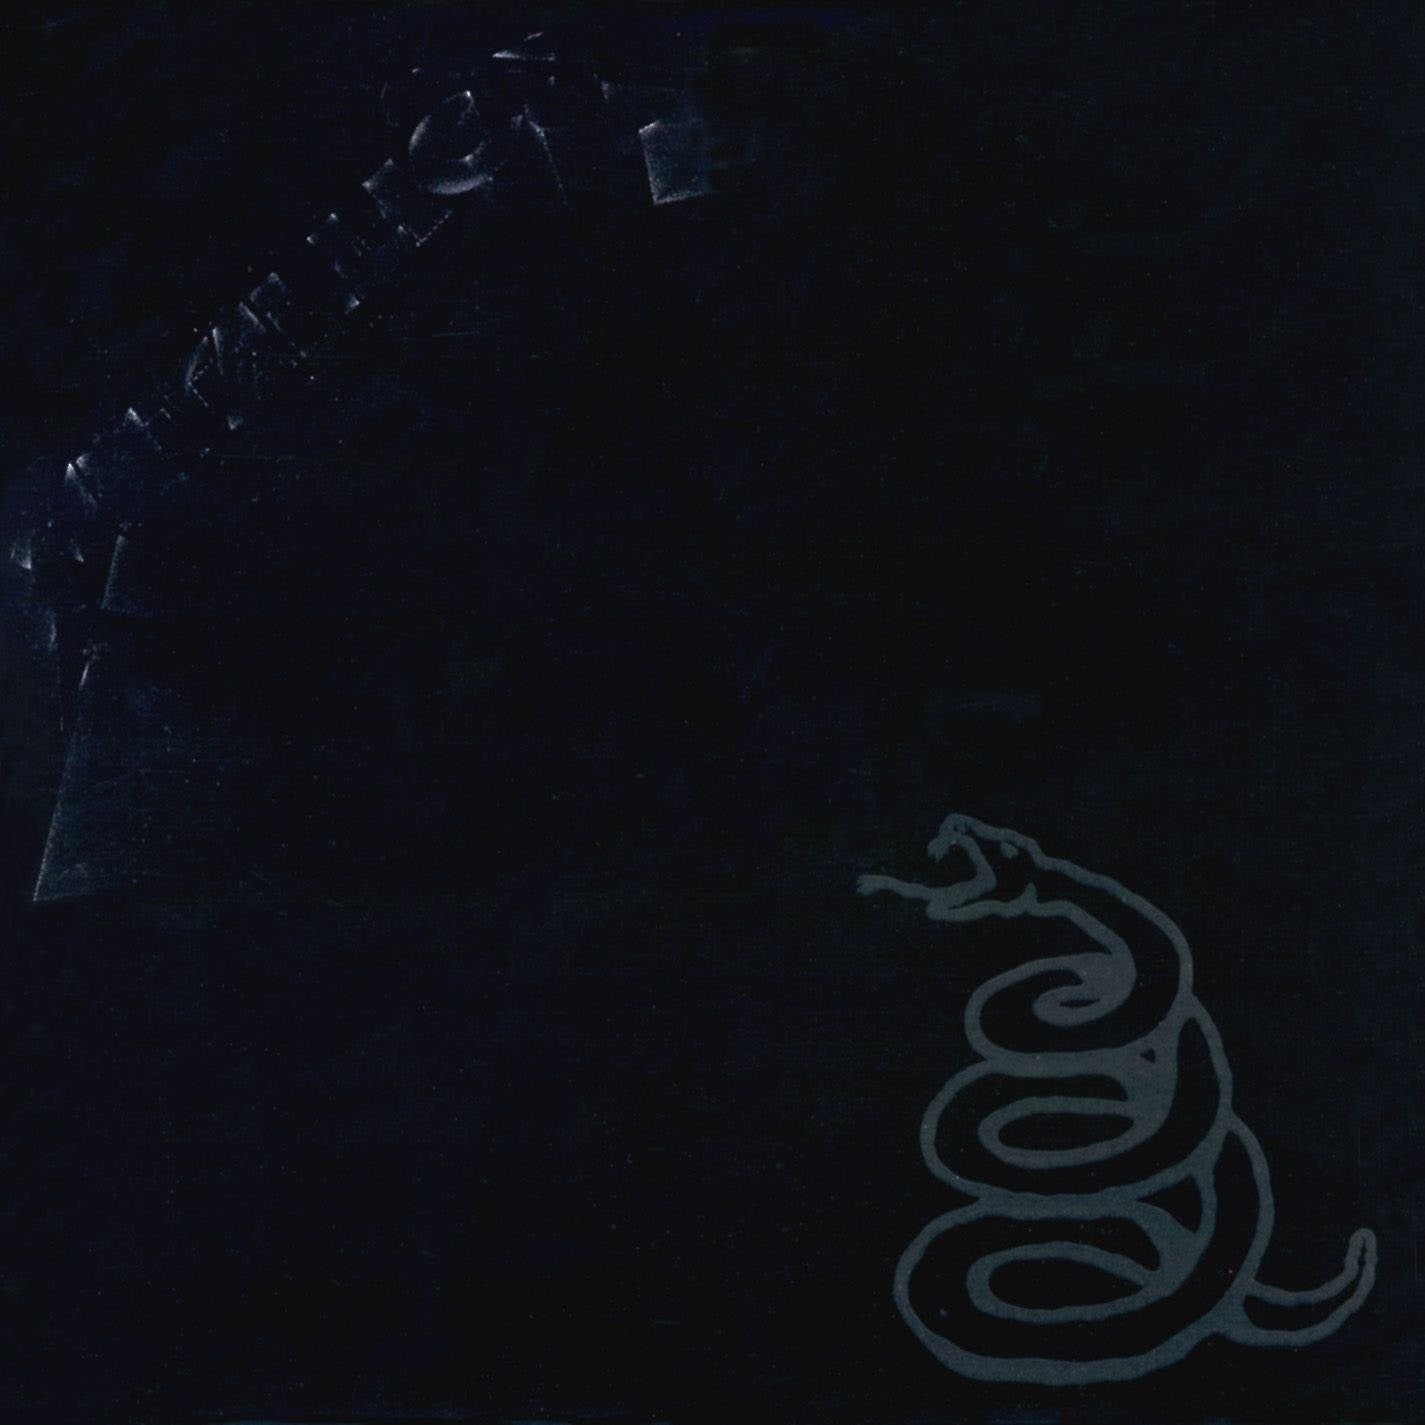 CD Metallica - Metallica